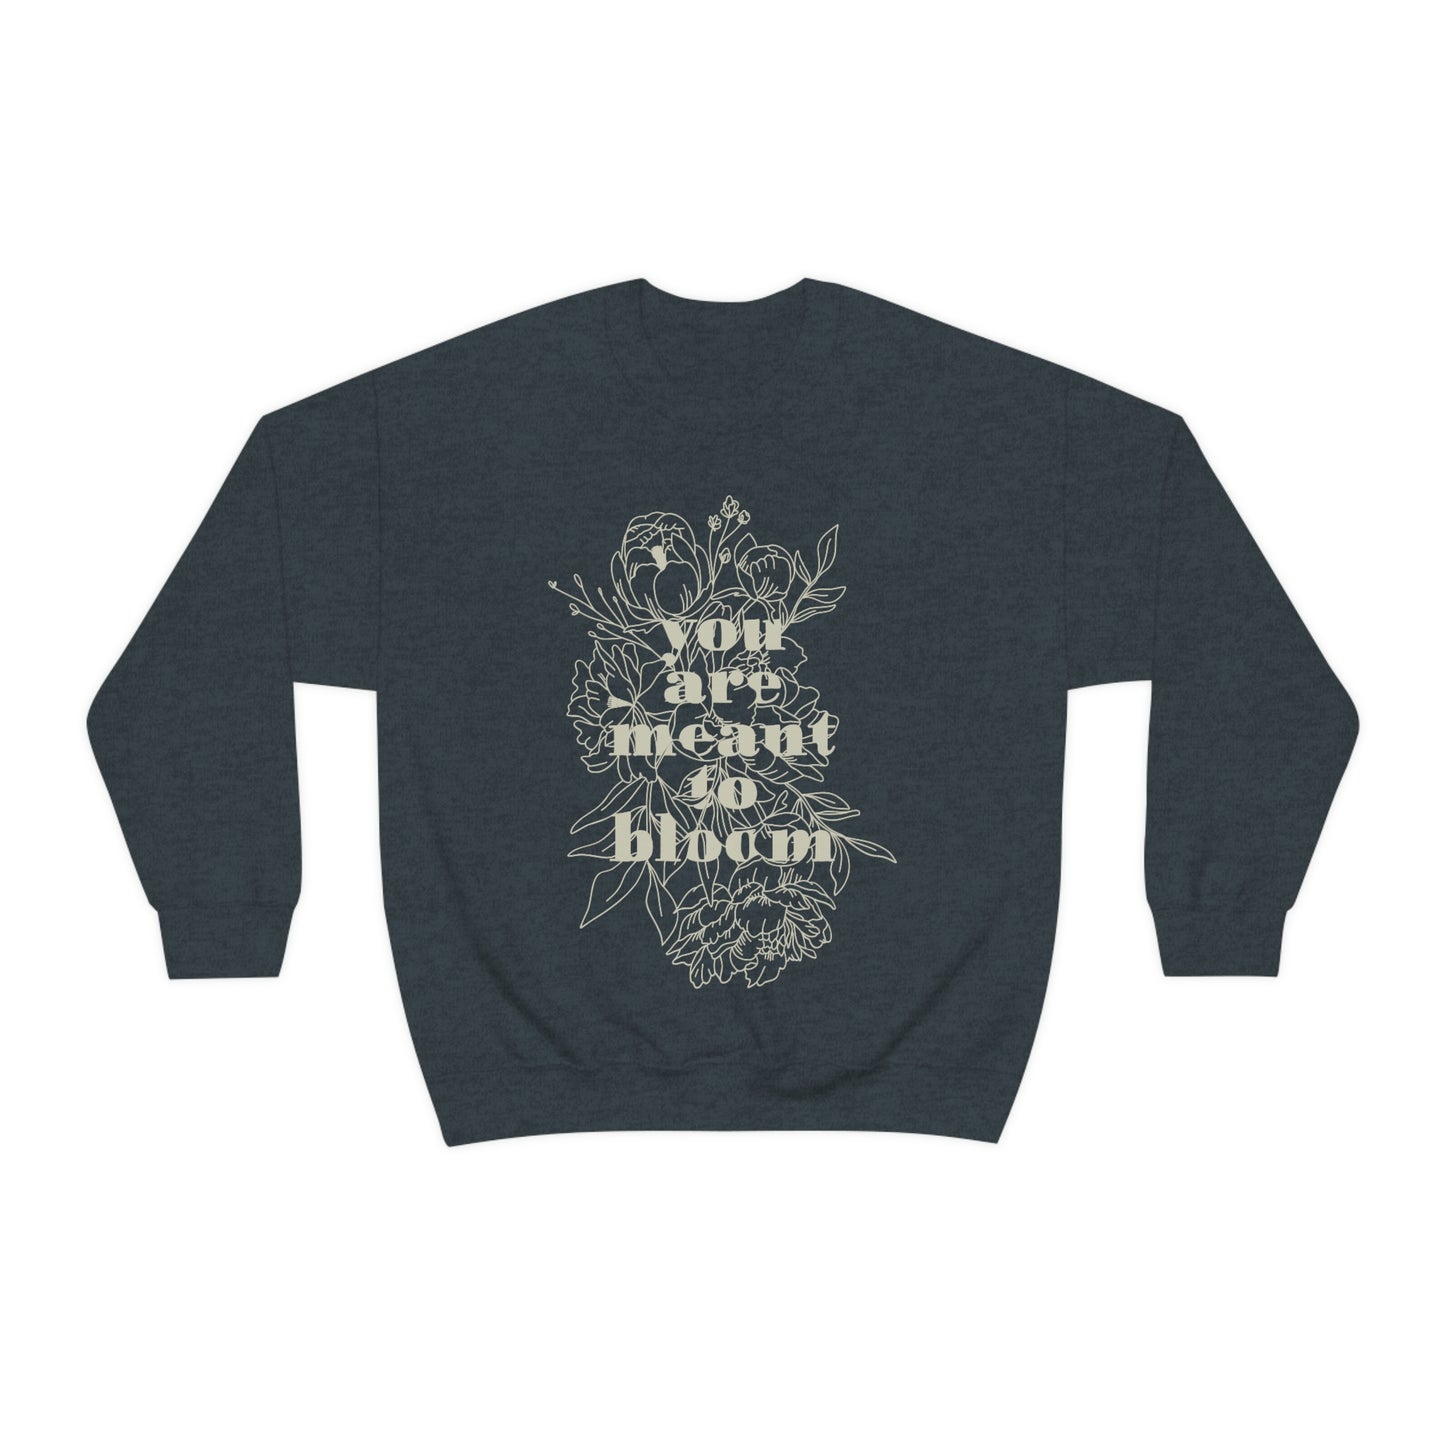 Meant to Bloom Crewneck Sweatshirt